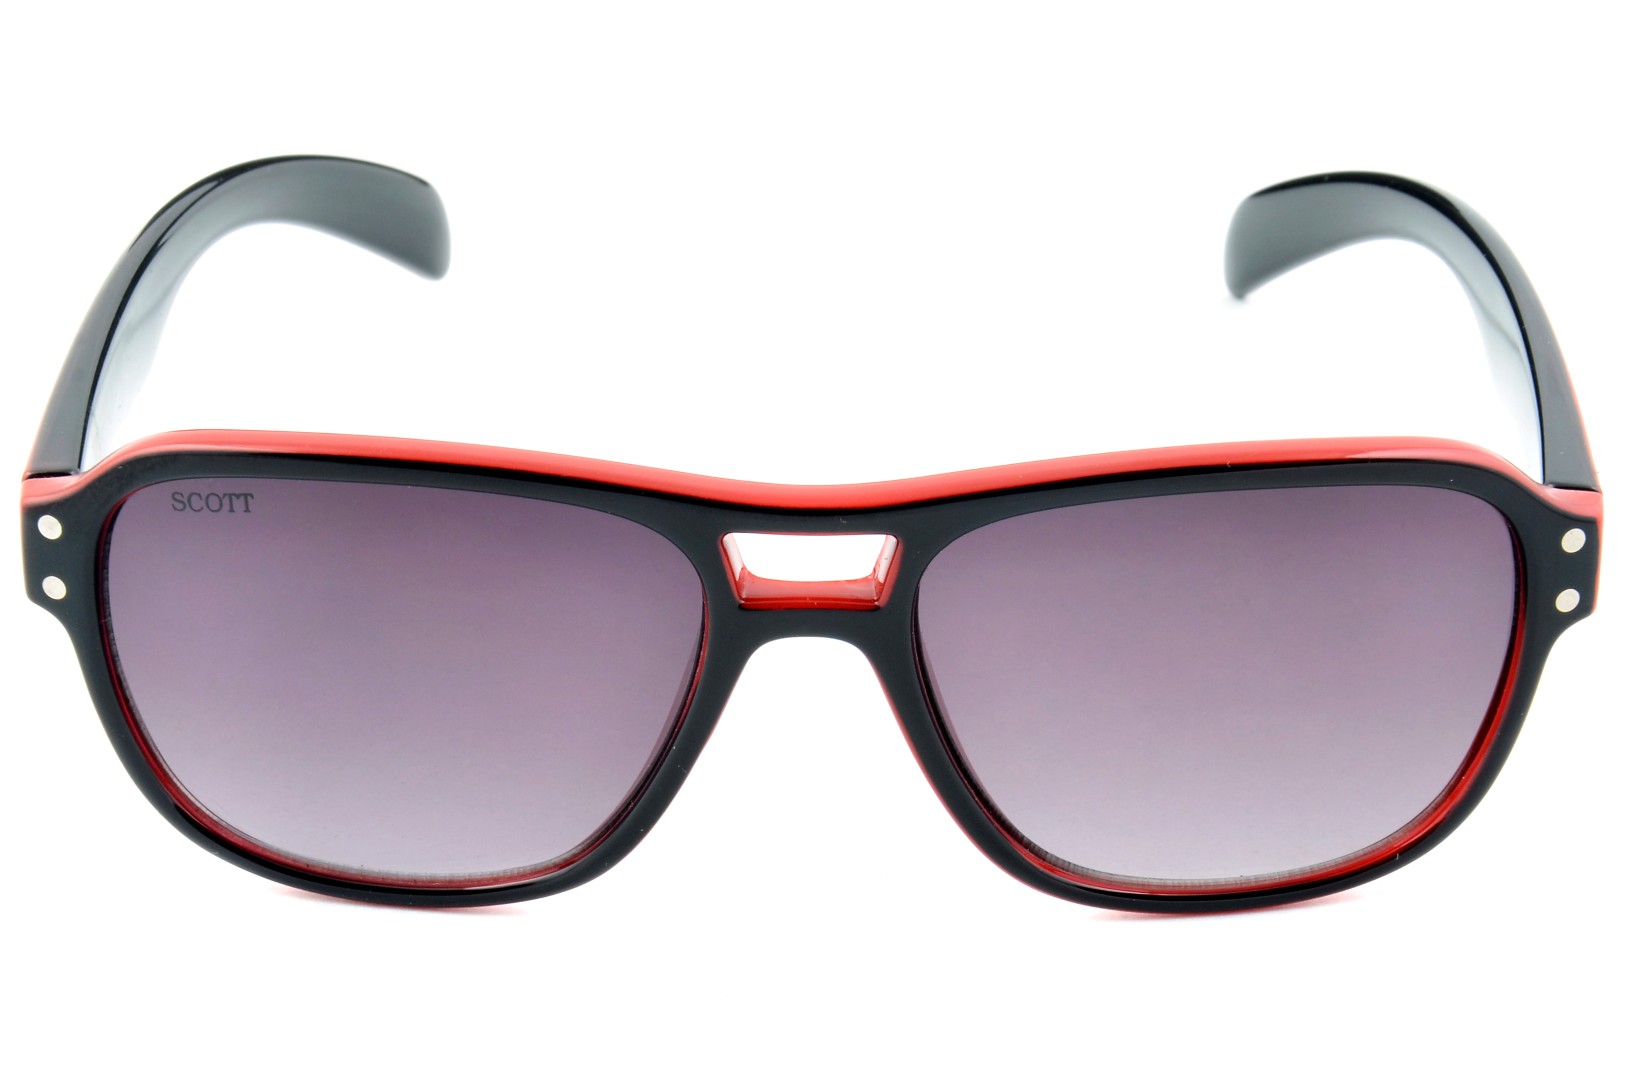 Buy Scott Wayfarer Sunglasses (SC-320PC-C1) Online @ ₹789 from ShopClues